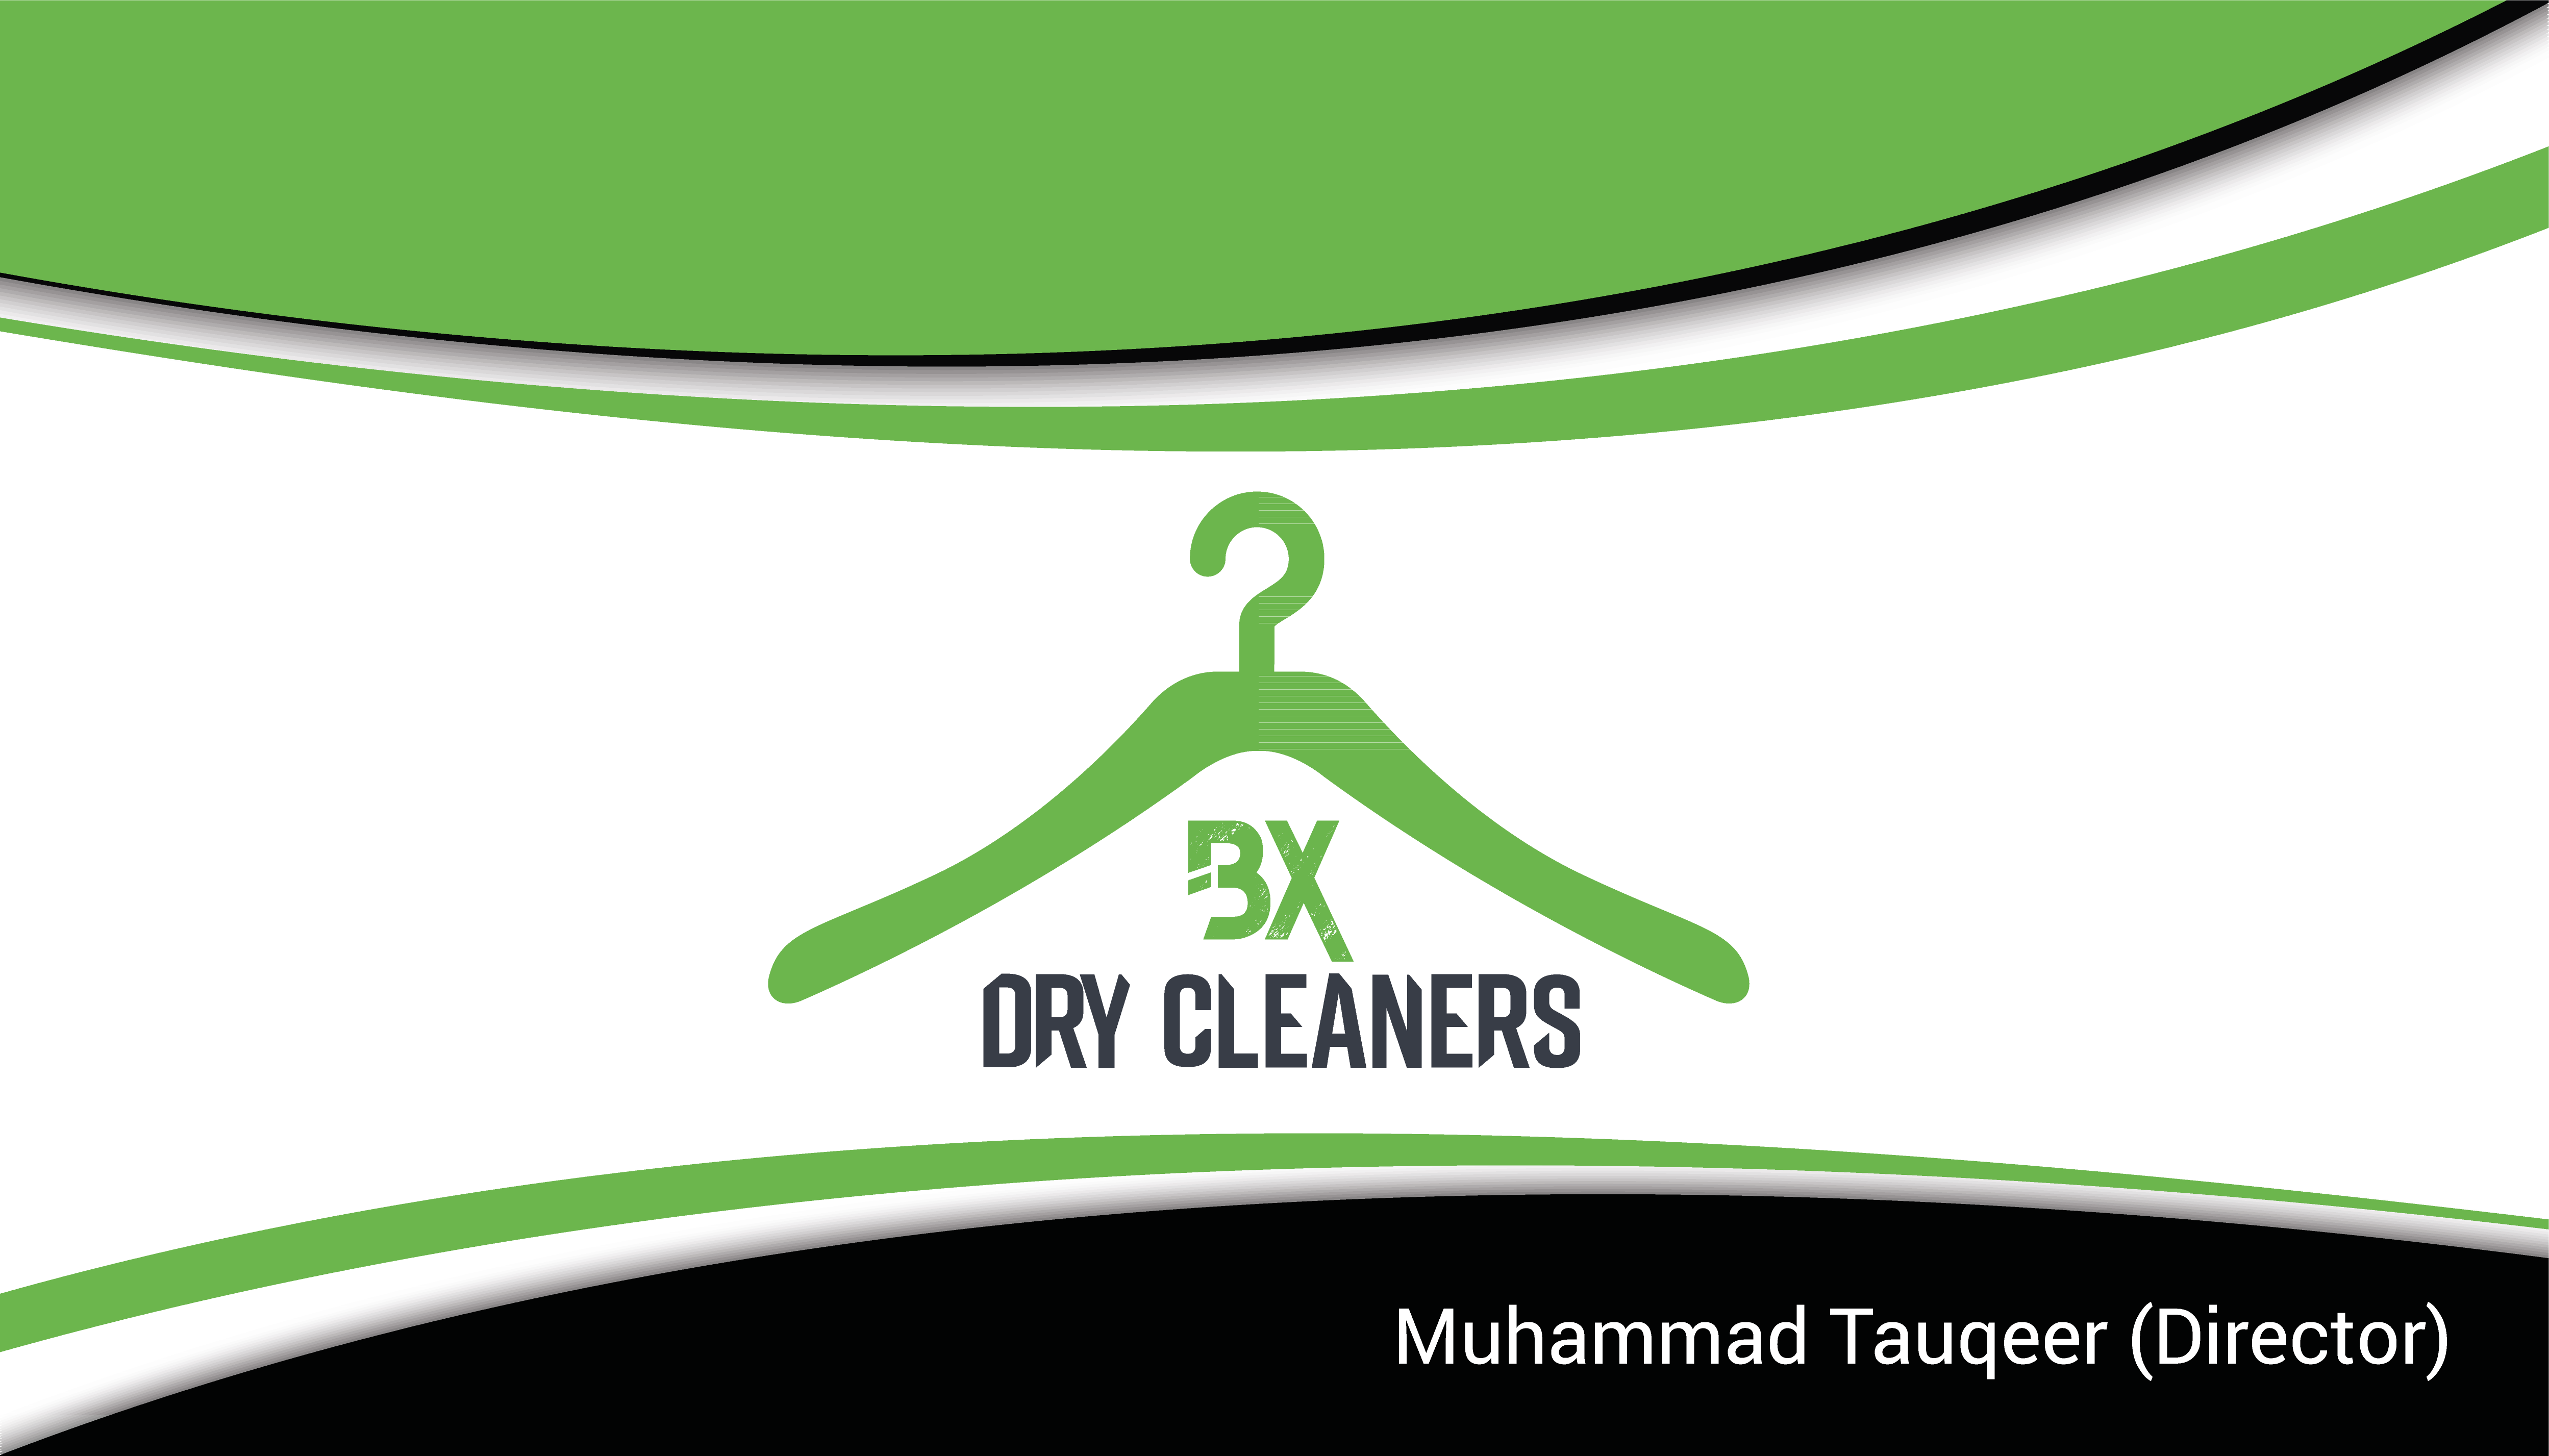 B X Dry Cleaners